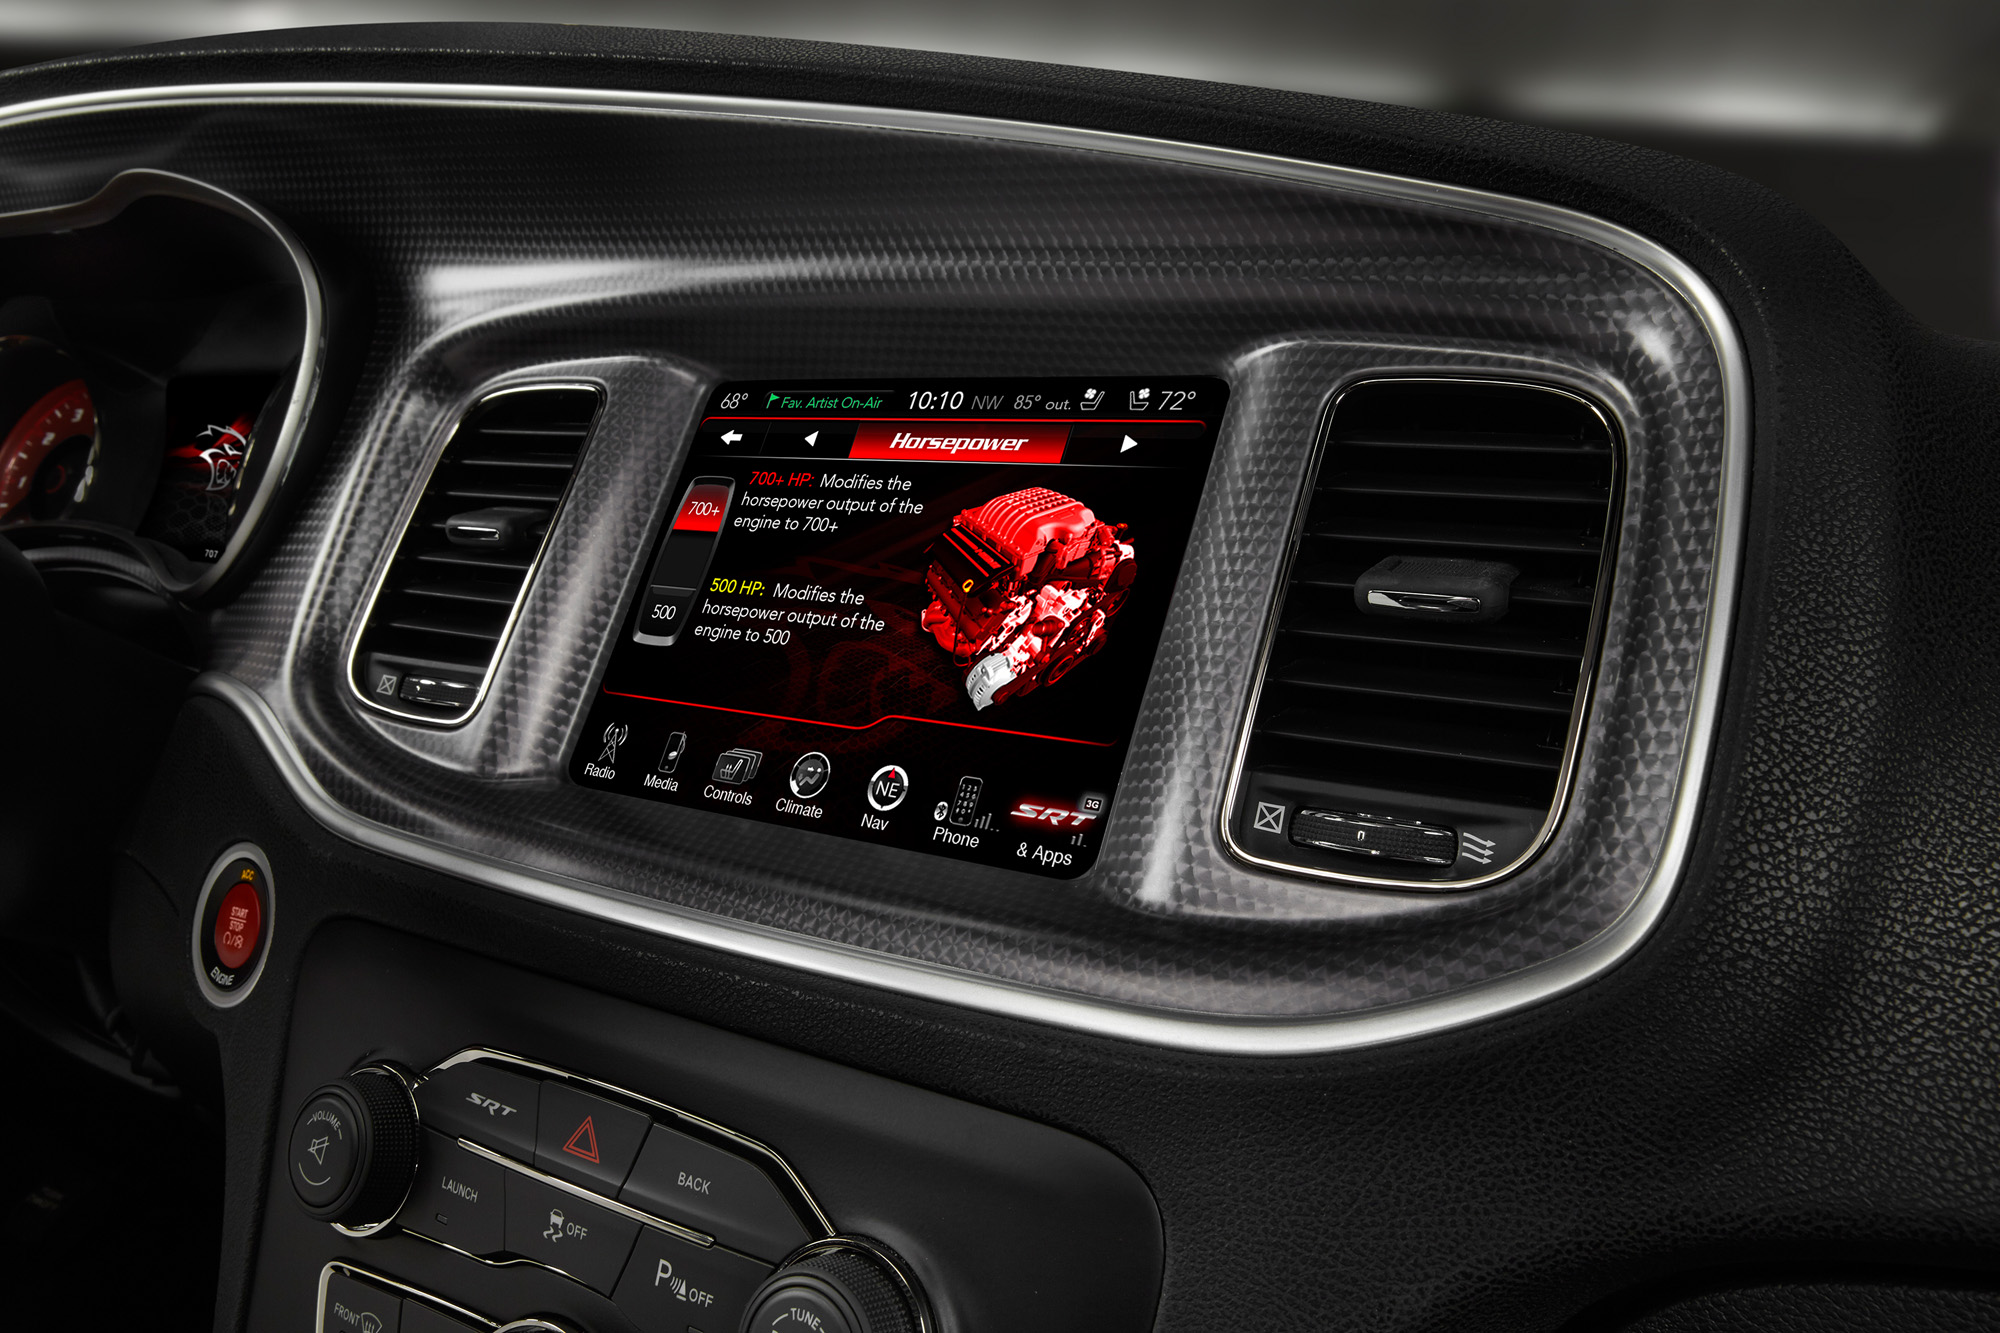 2015 Dodge Charger SRT - Horsepower Toggle screen